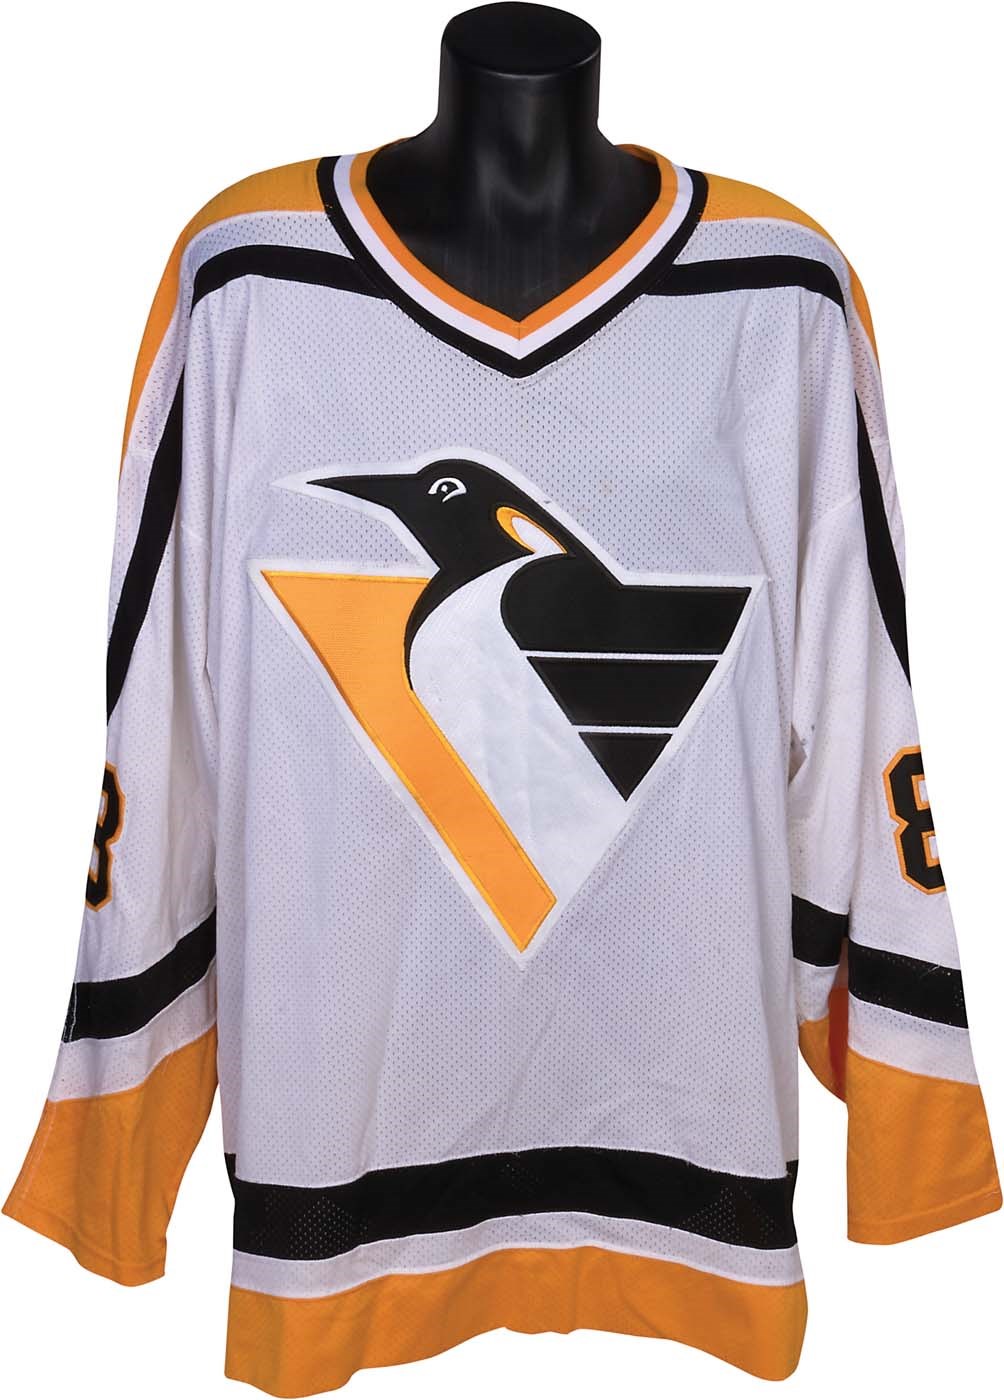 1999 penguins jersey